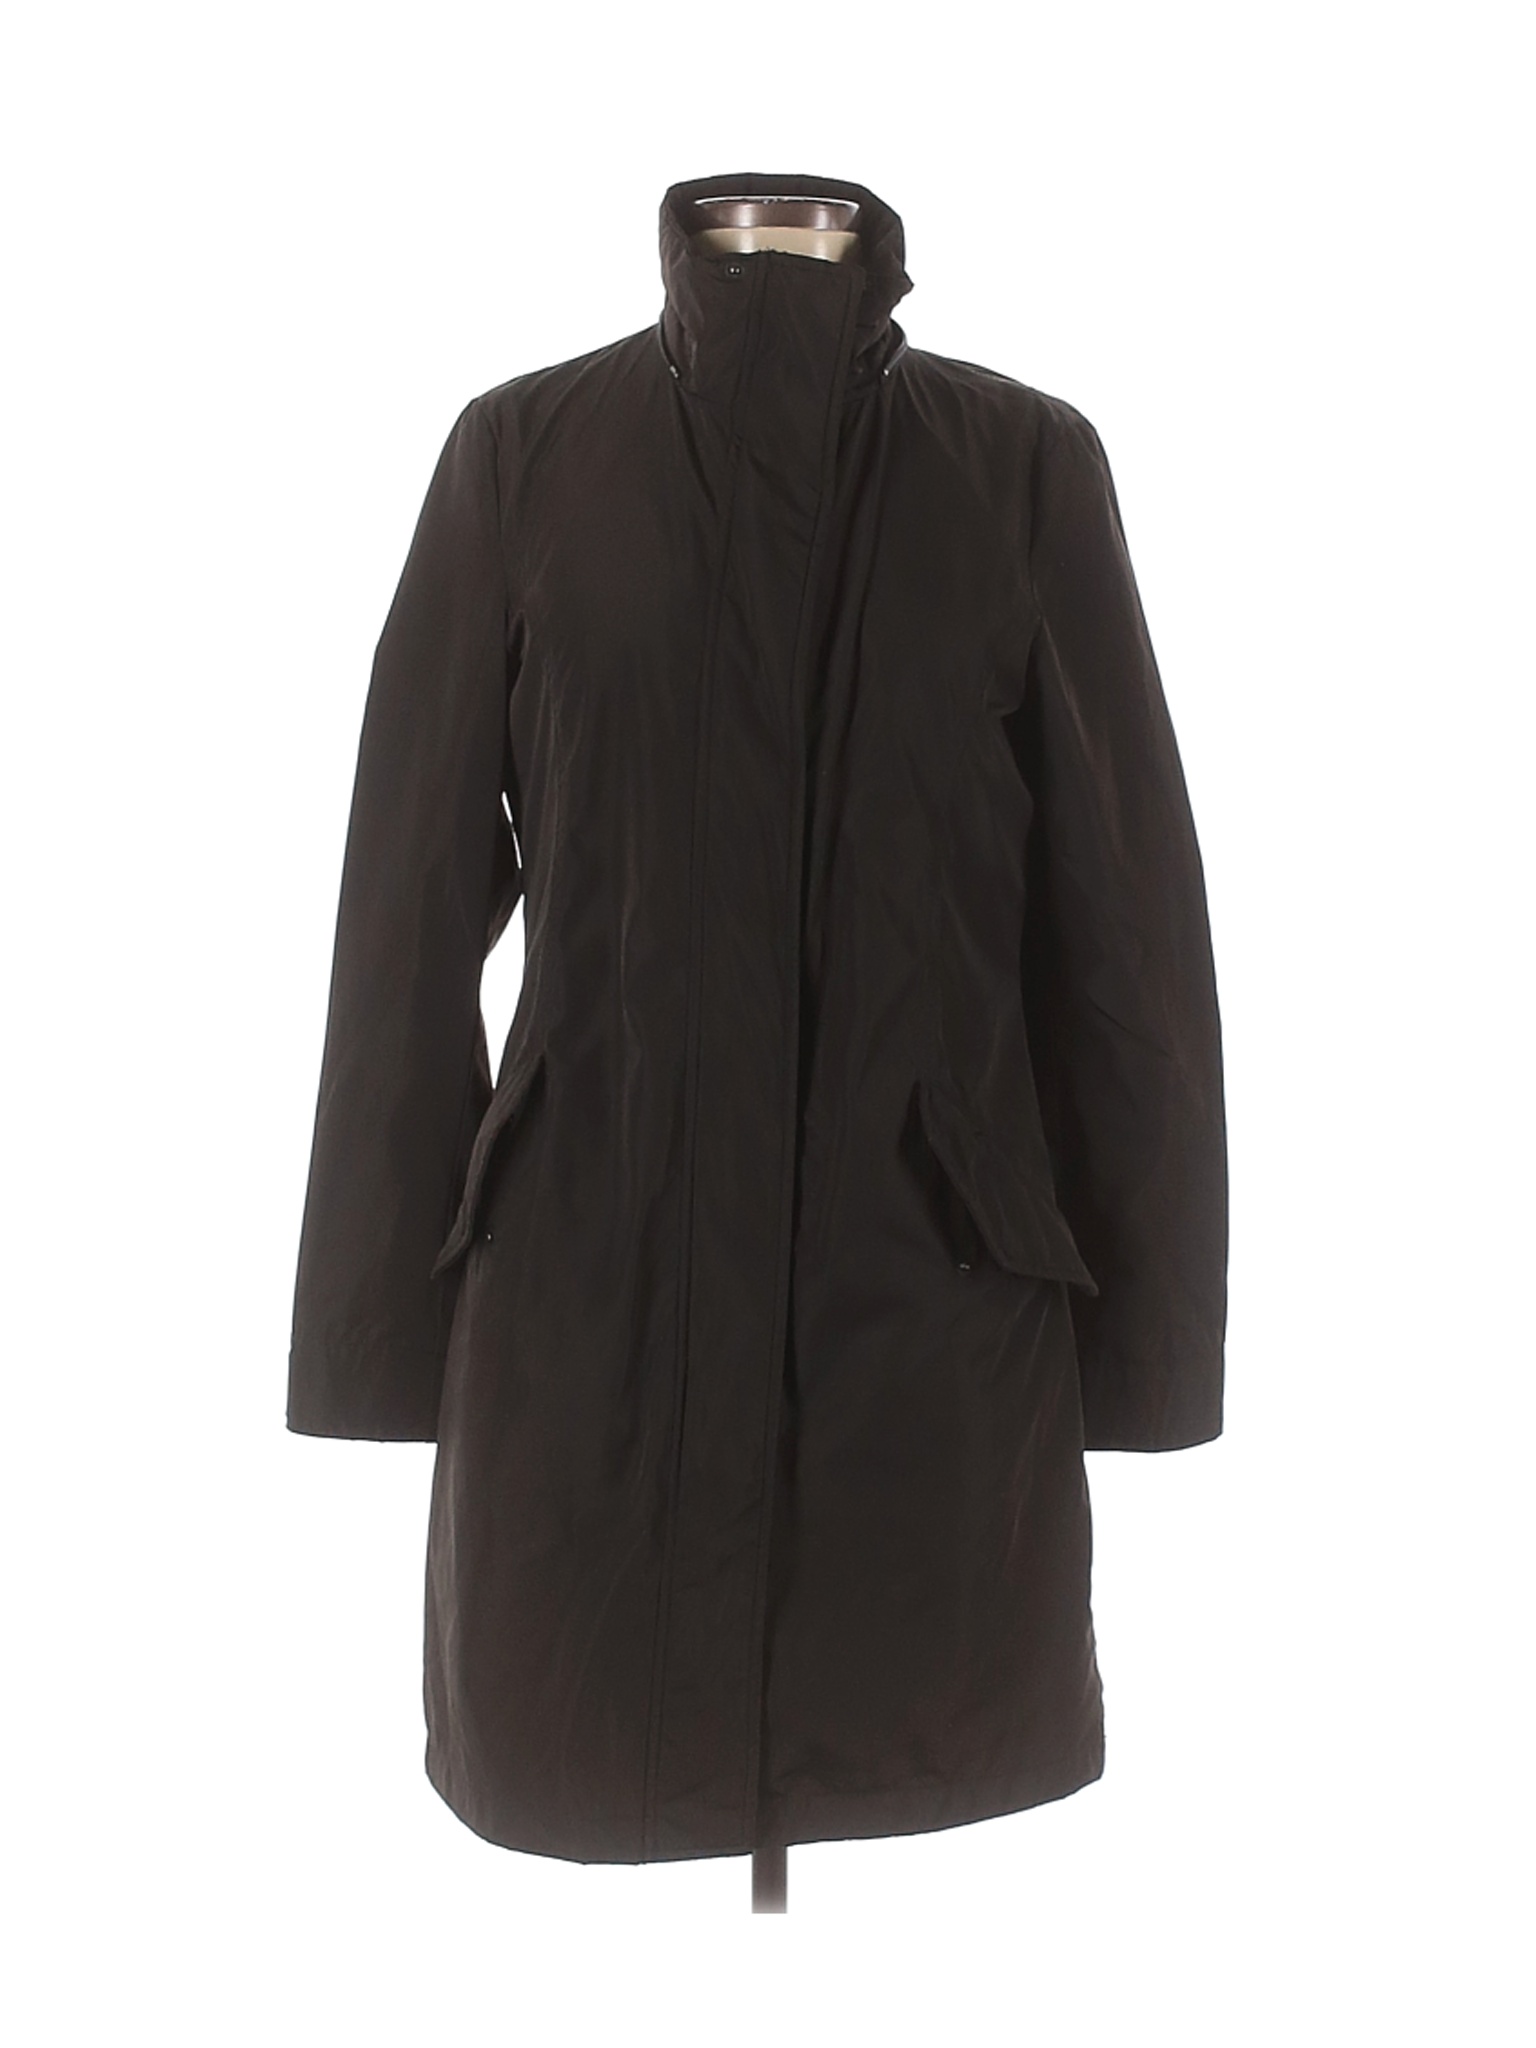 Zara Basic Women Black Coat M | eBay